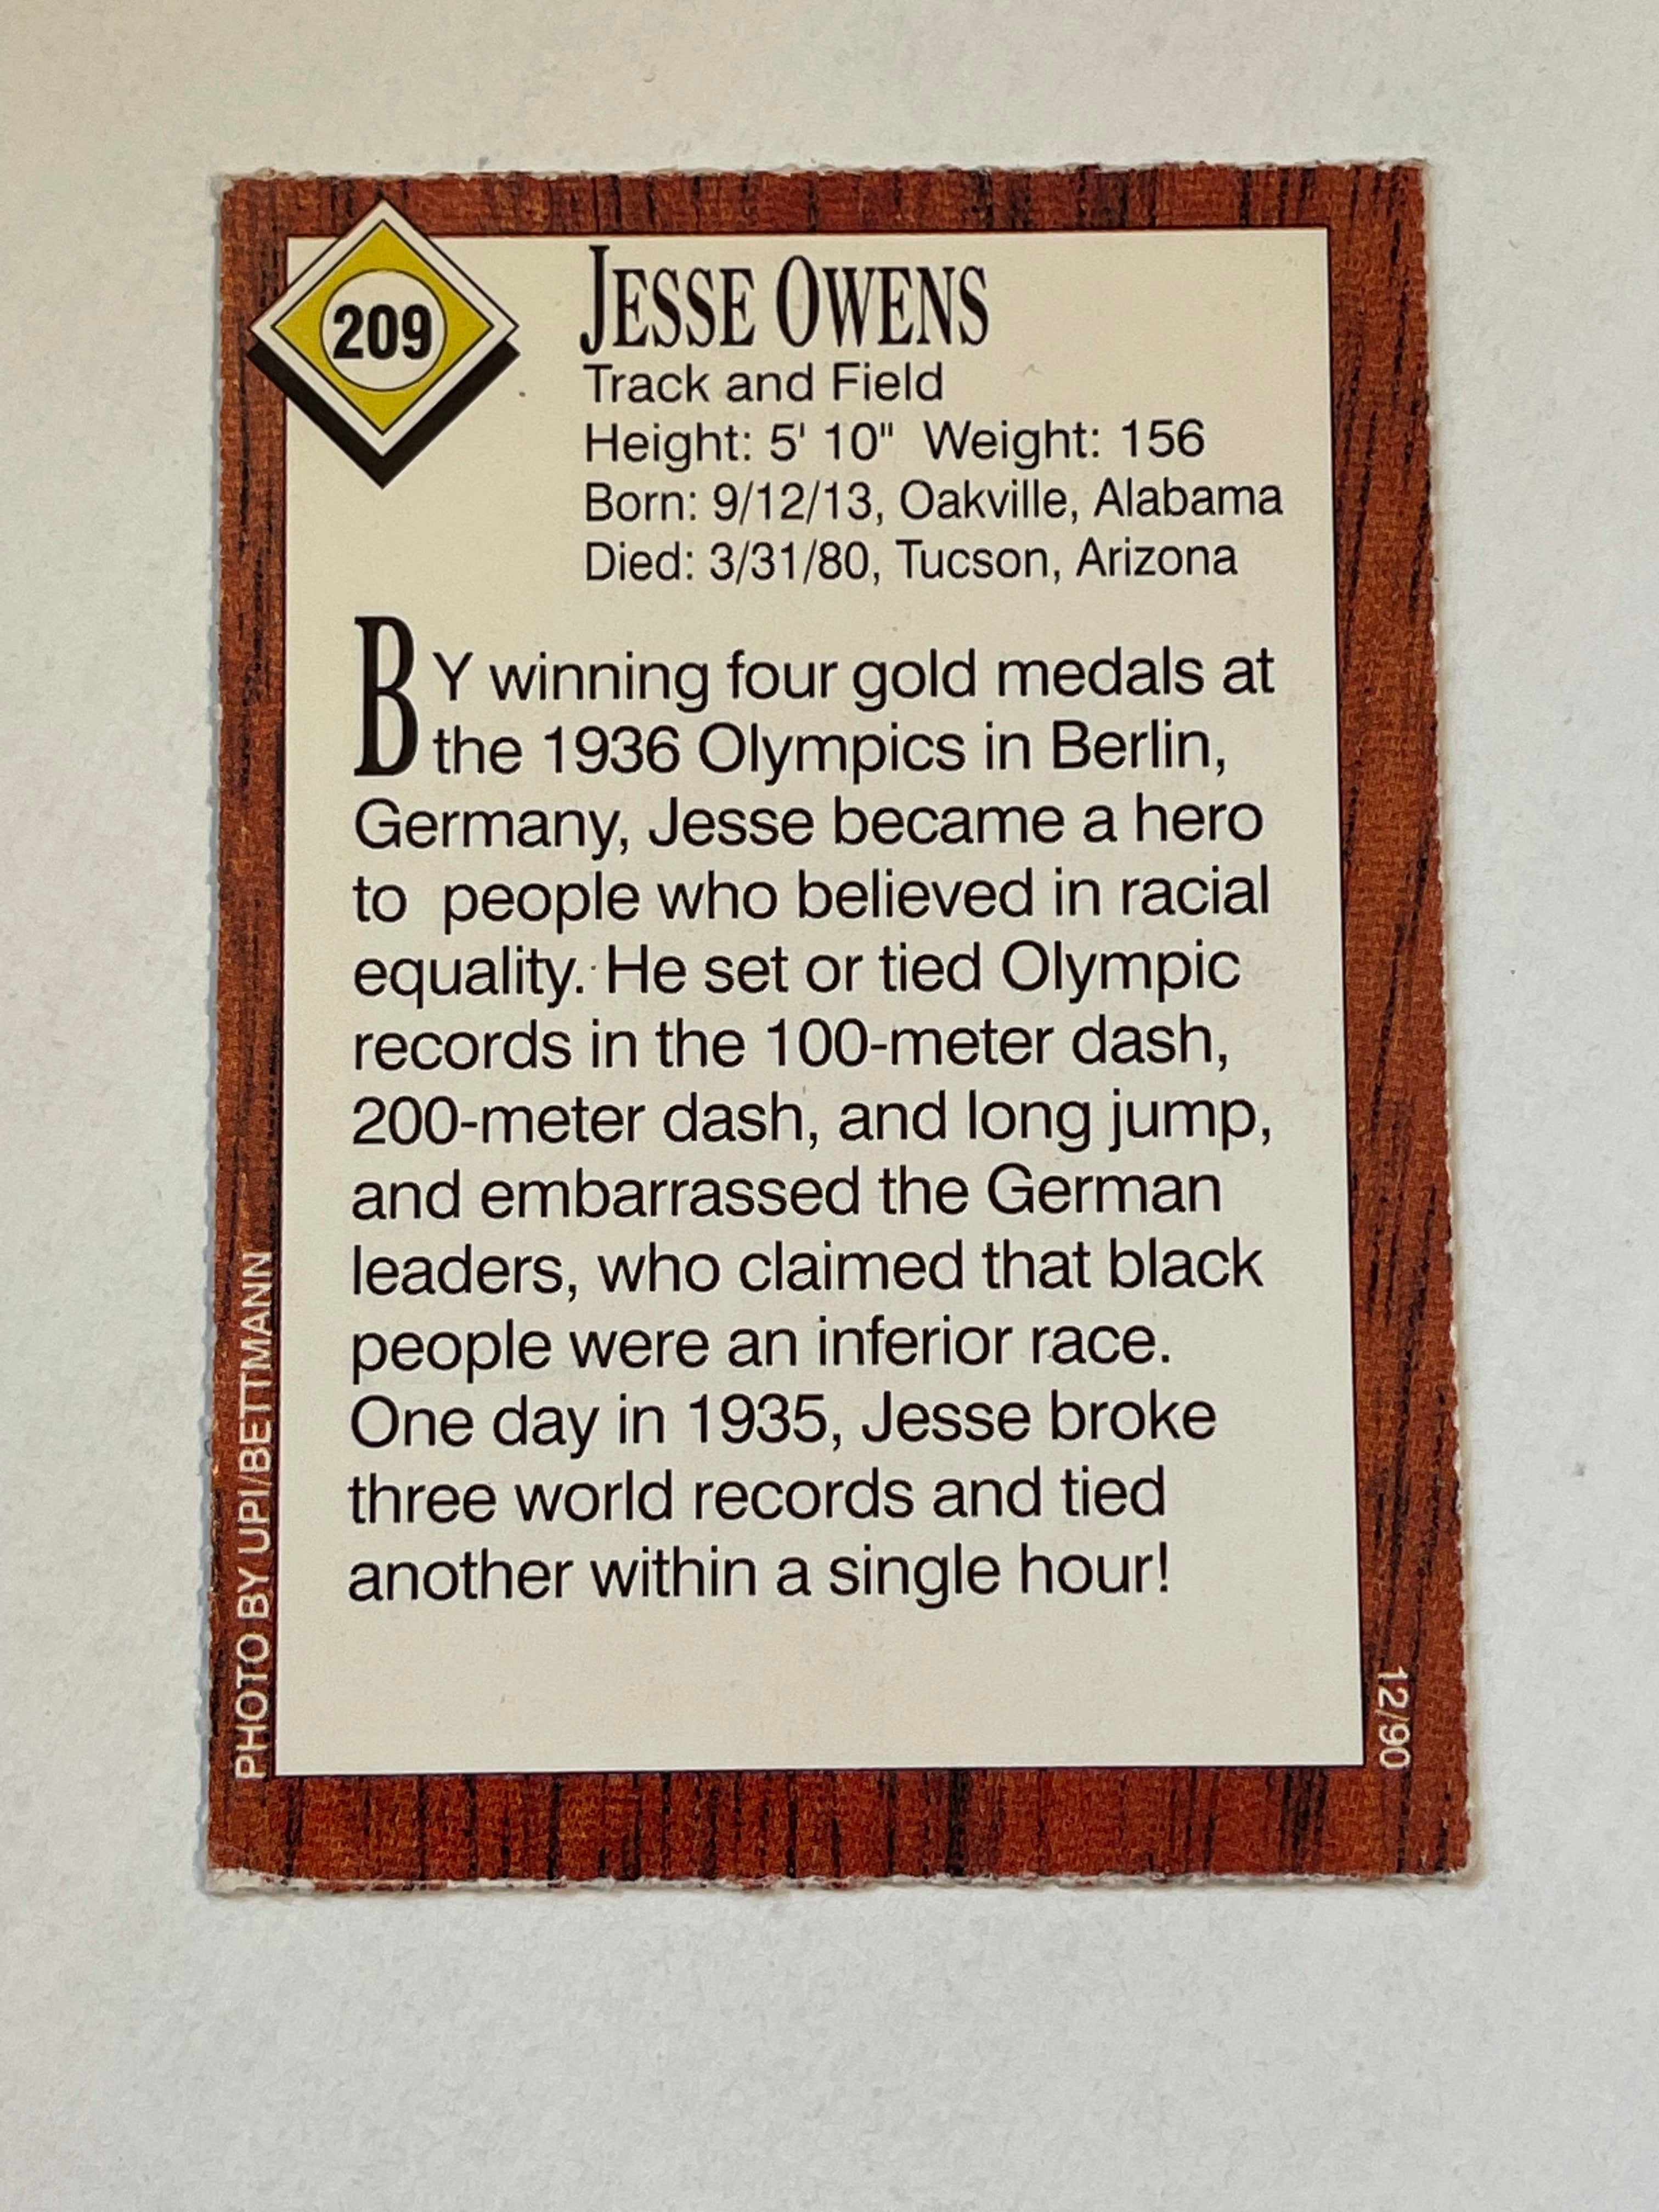 Jesse Owens Olympic star SI card 1990